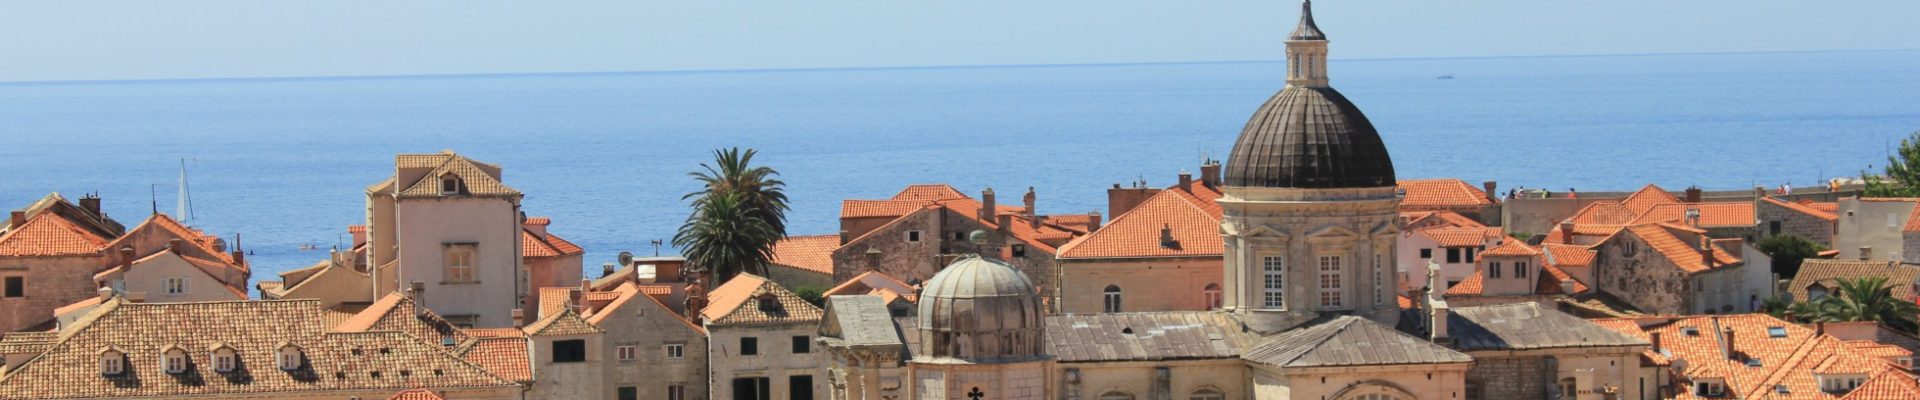 Dubrovnik strip